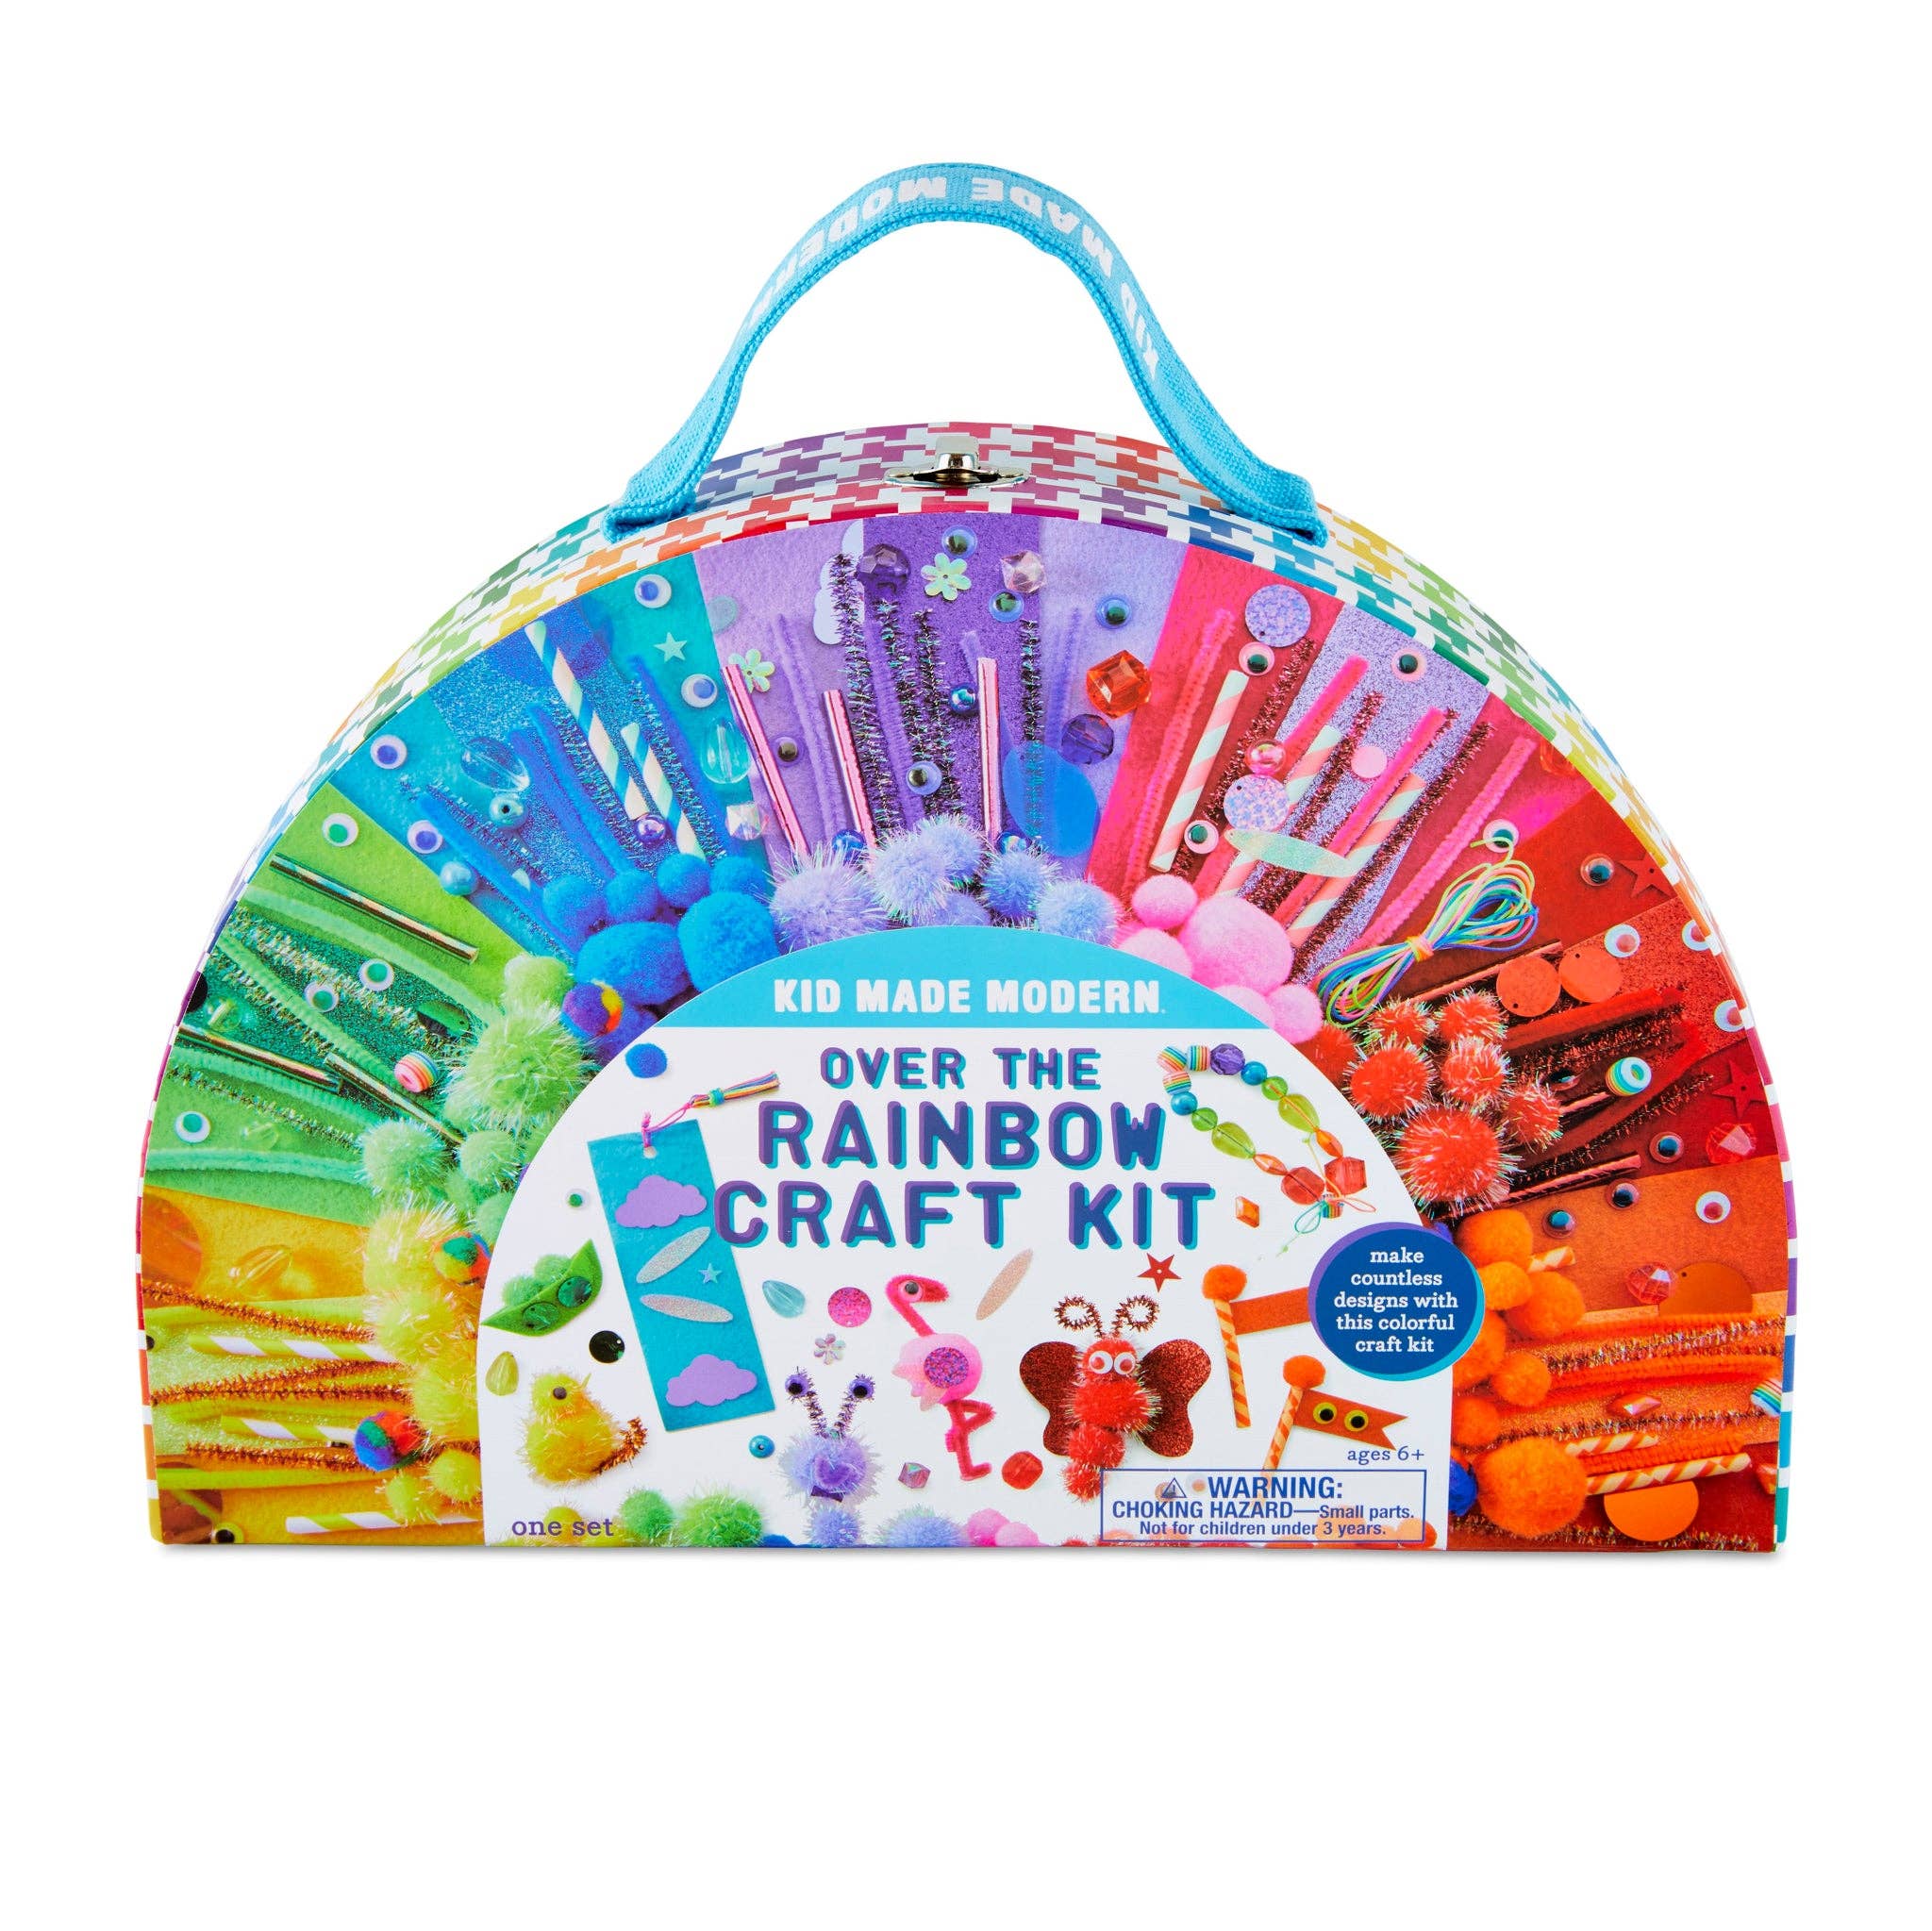 Rainbow Colours Felt Balls (Pack of 56) Craft Supplies